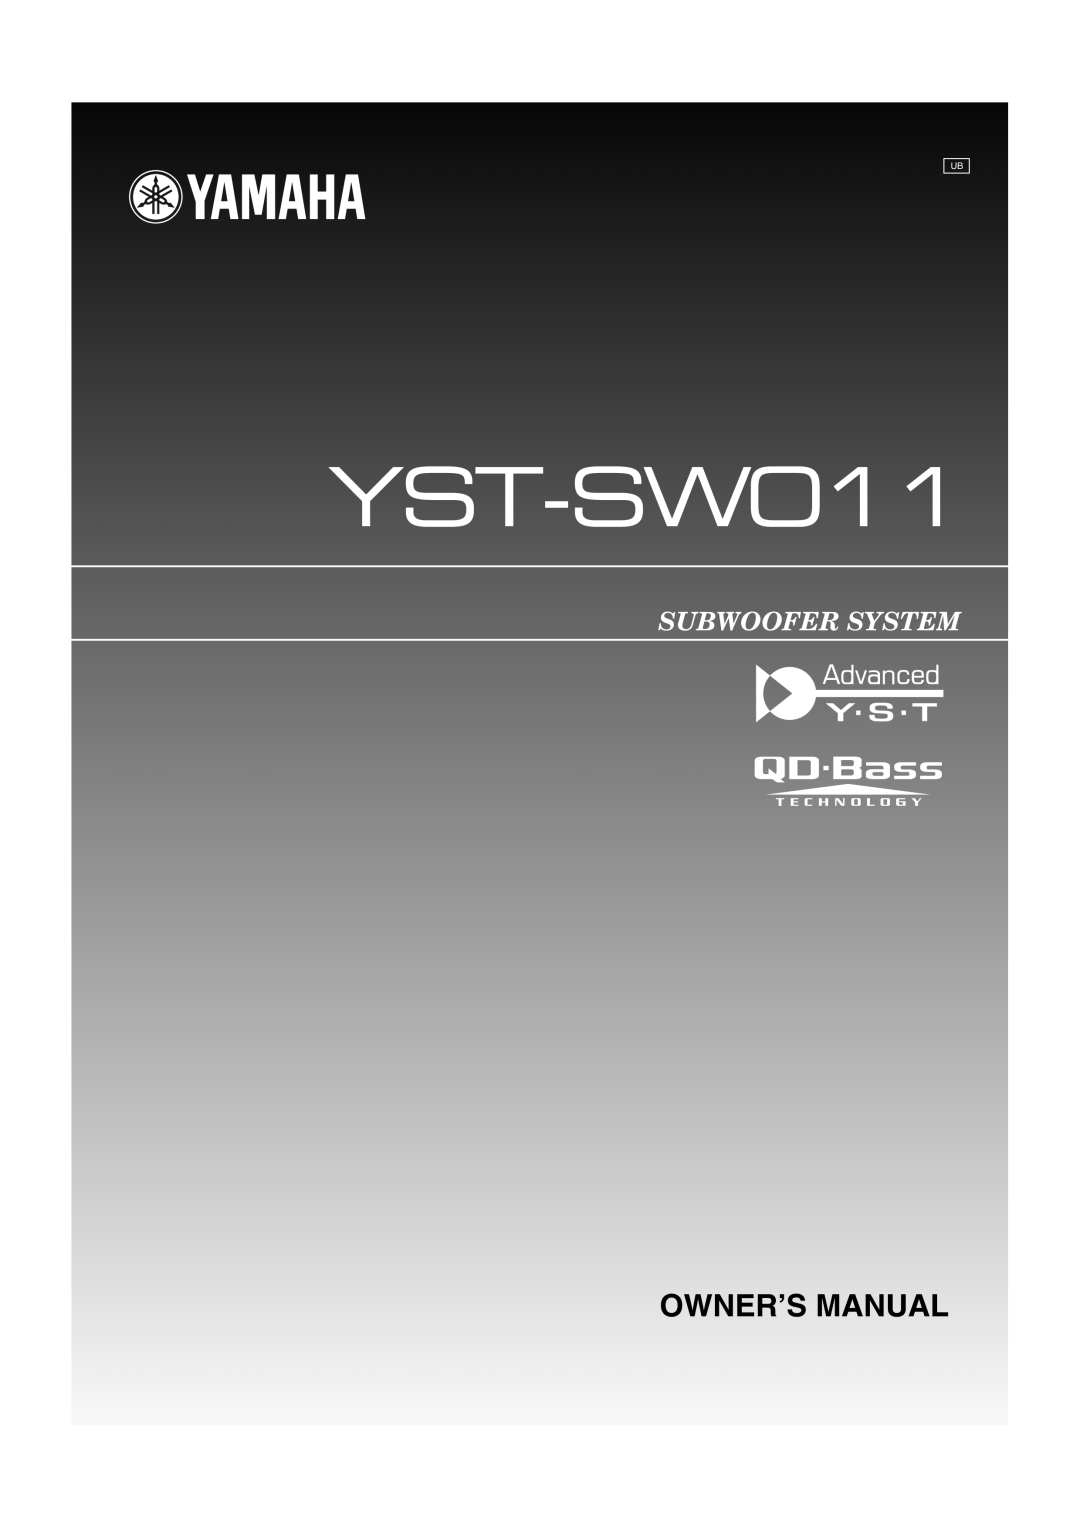 Yamaha YST-SW011 owner manual Subwoofer System 